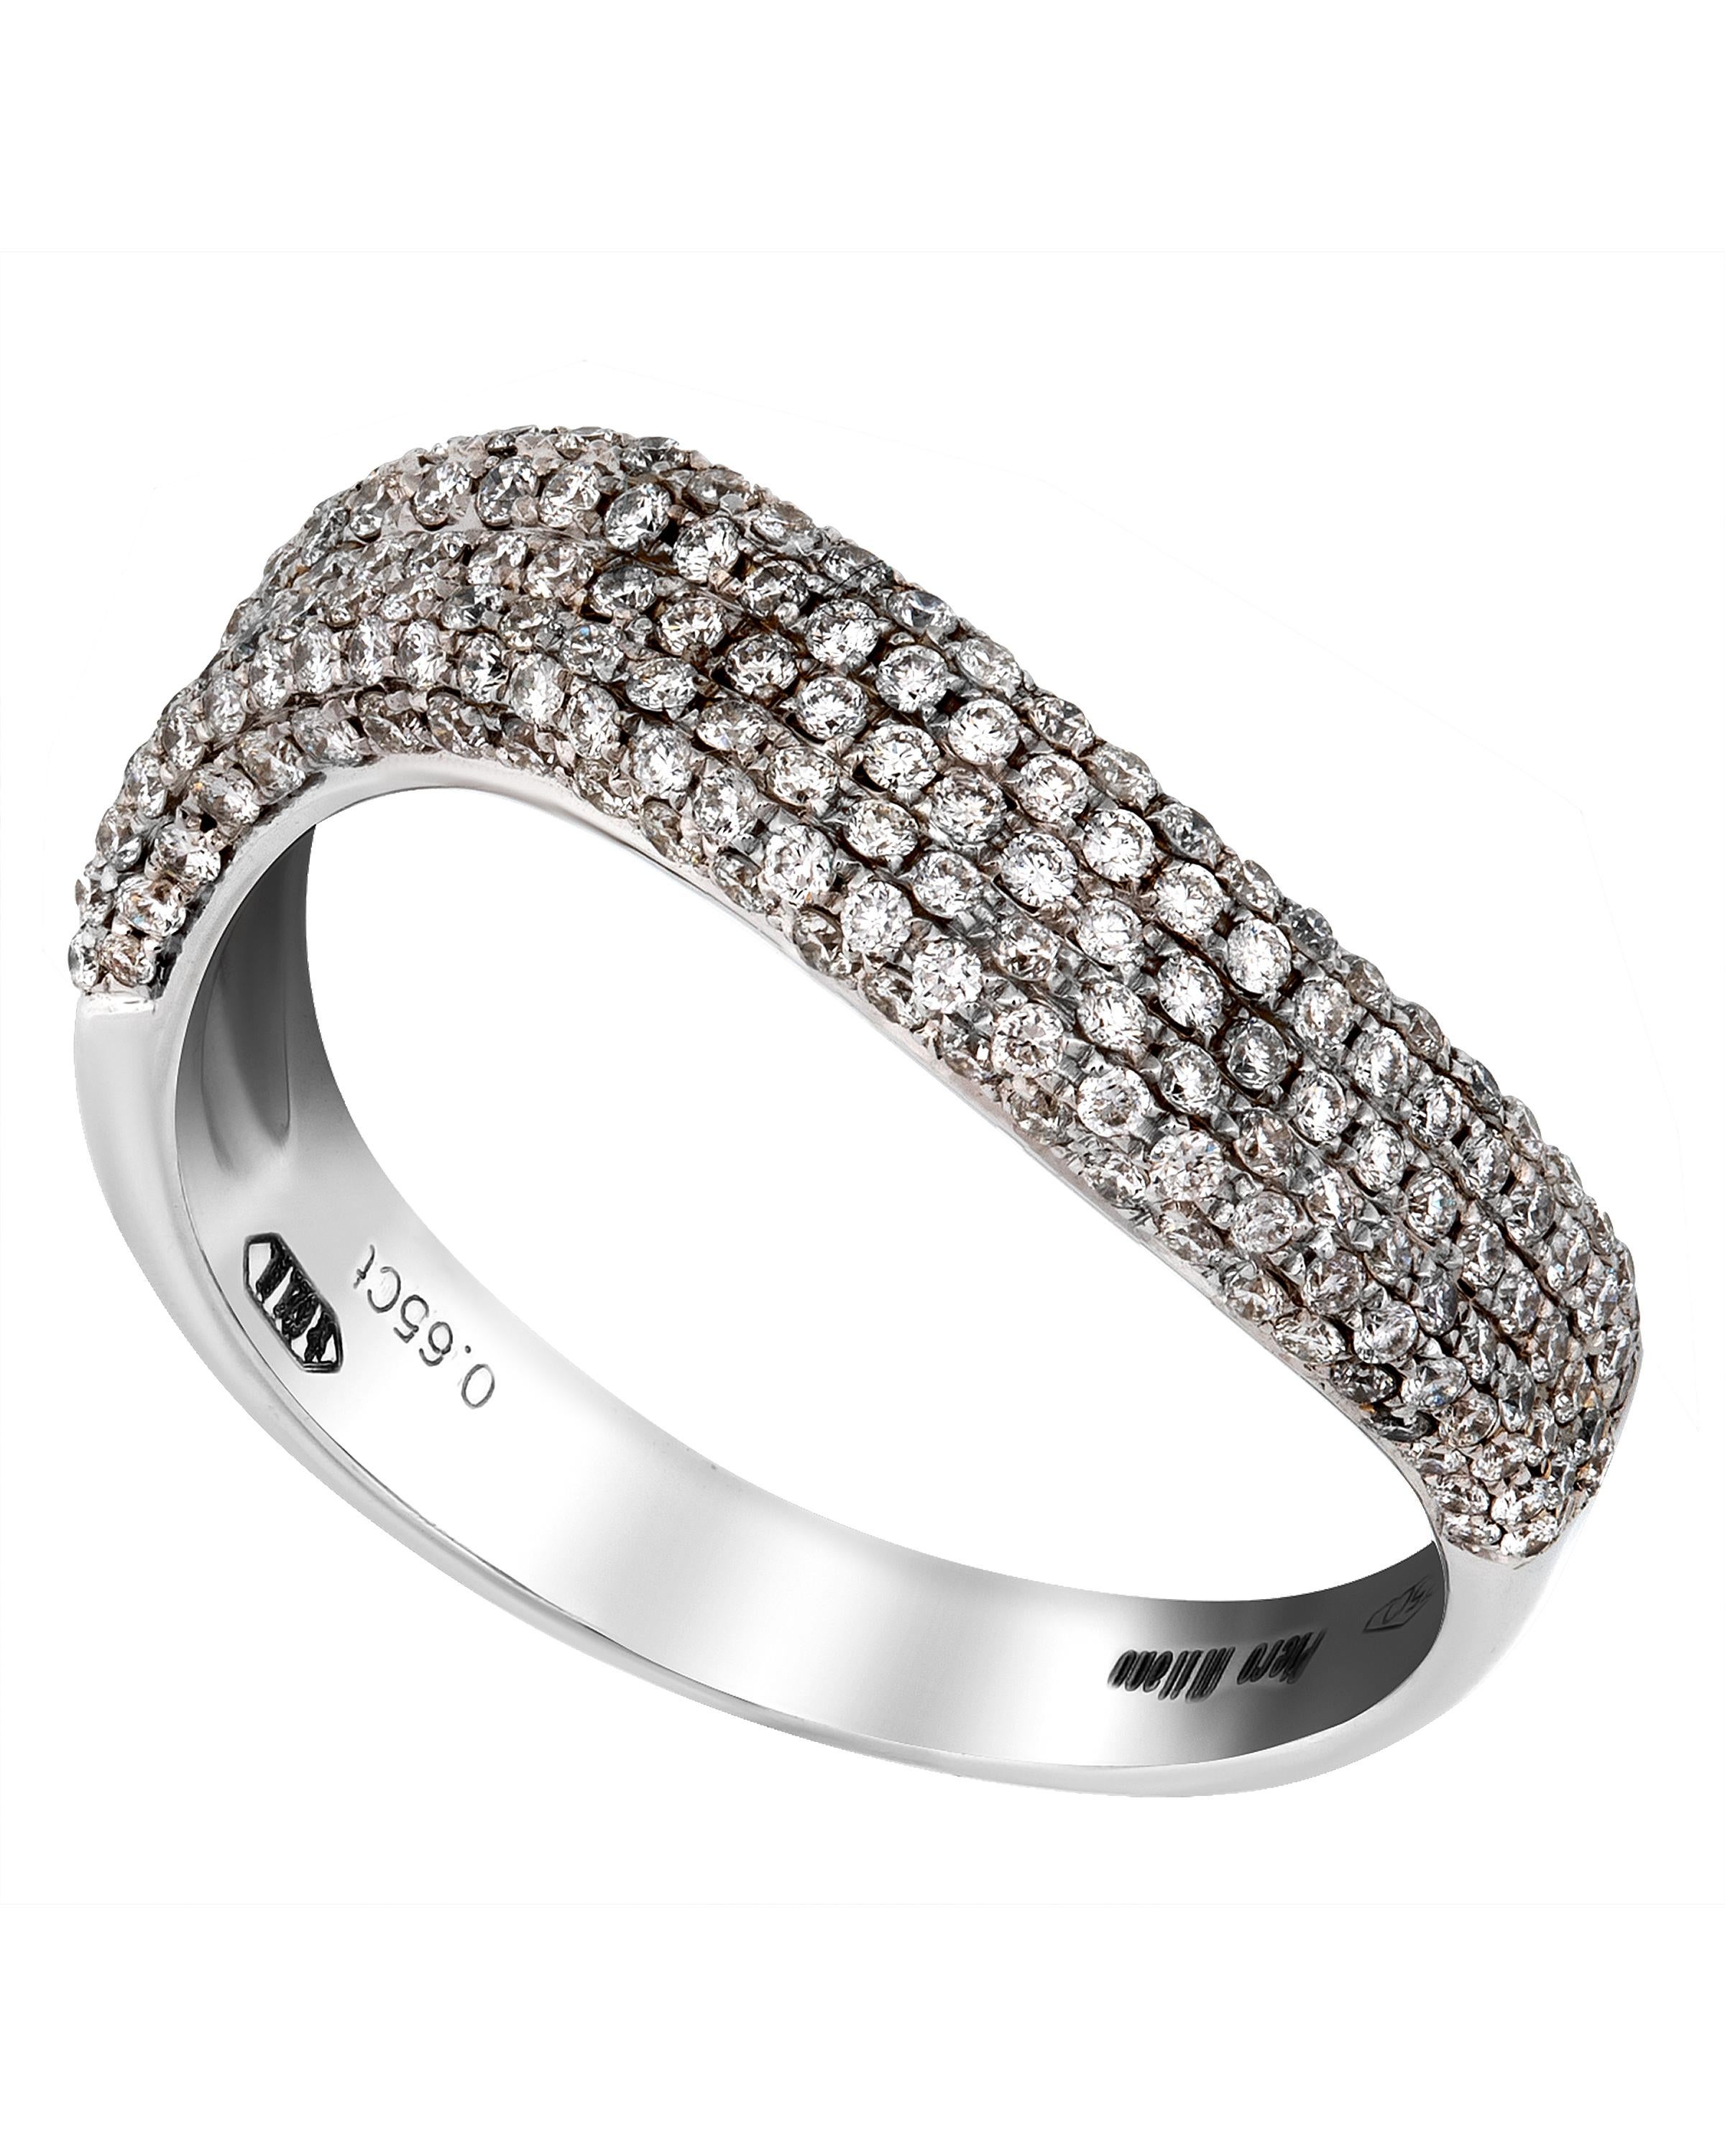 Contemporary Piero Milano 18K White Gold Diamond Ring Sz 7.5 For Sale